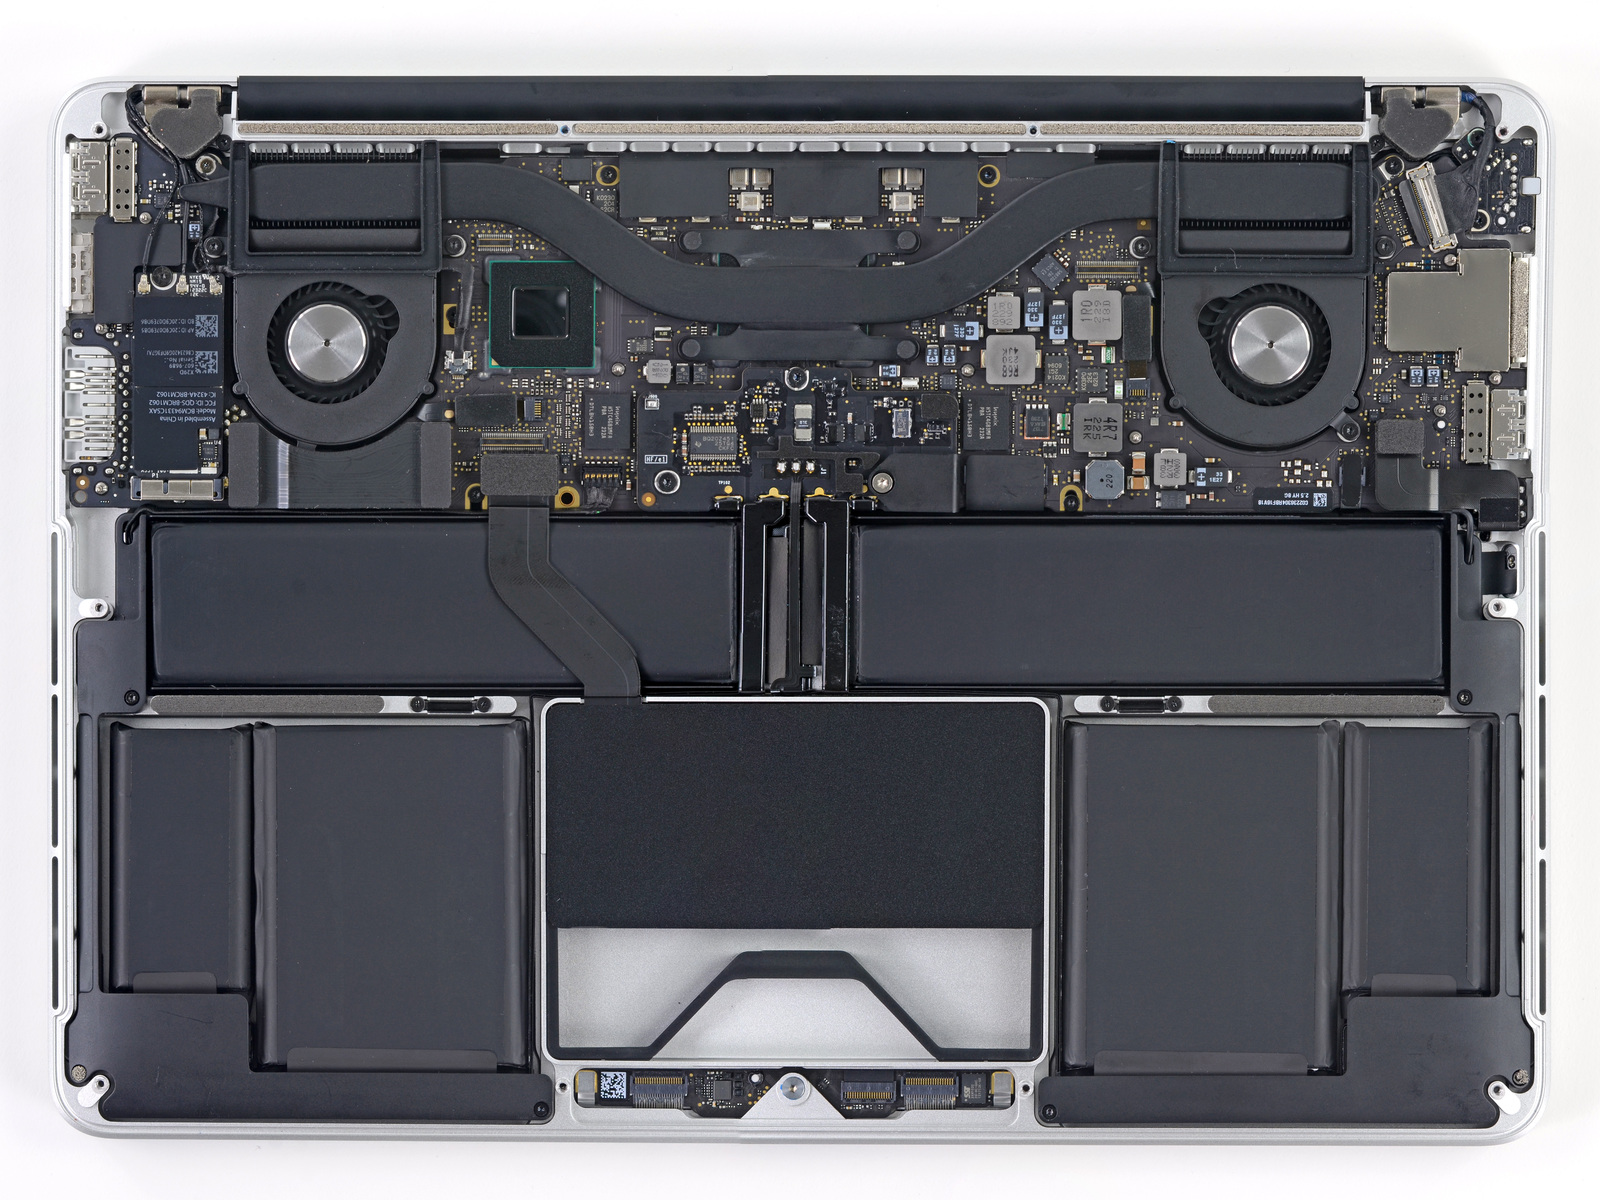 13“ Retina MacBook Pro review: more pixels, less value | Ars Technica